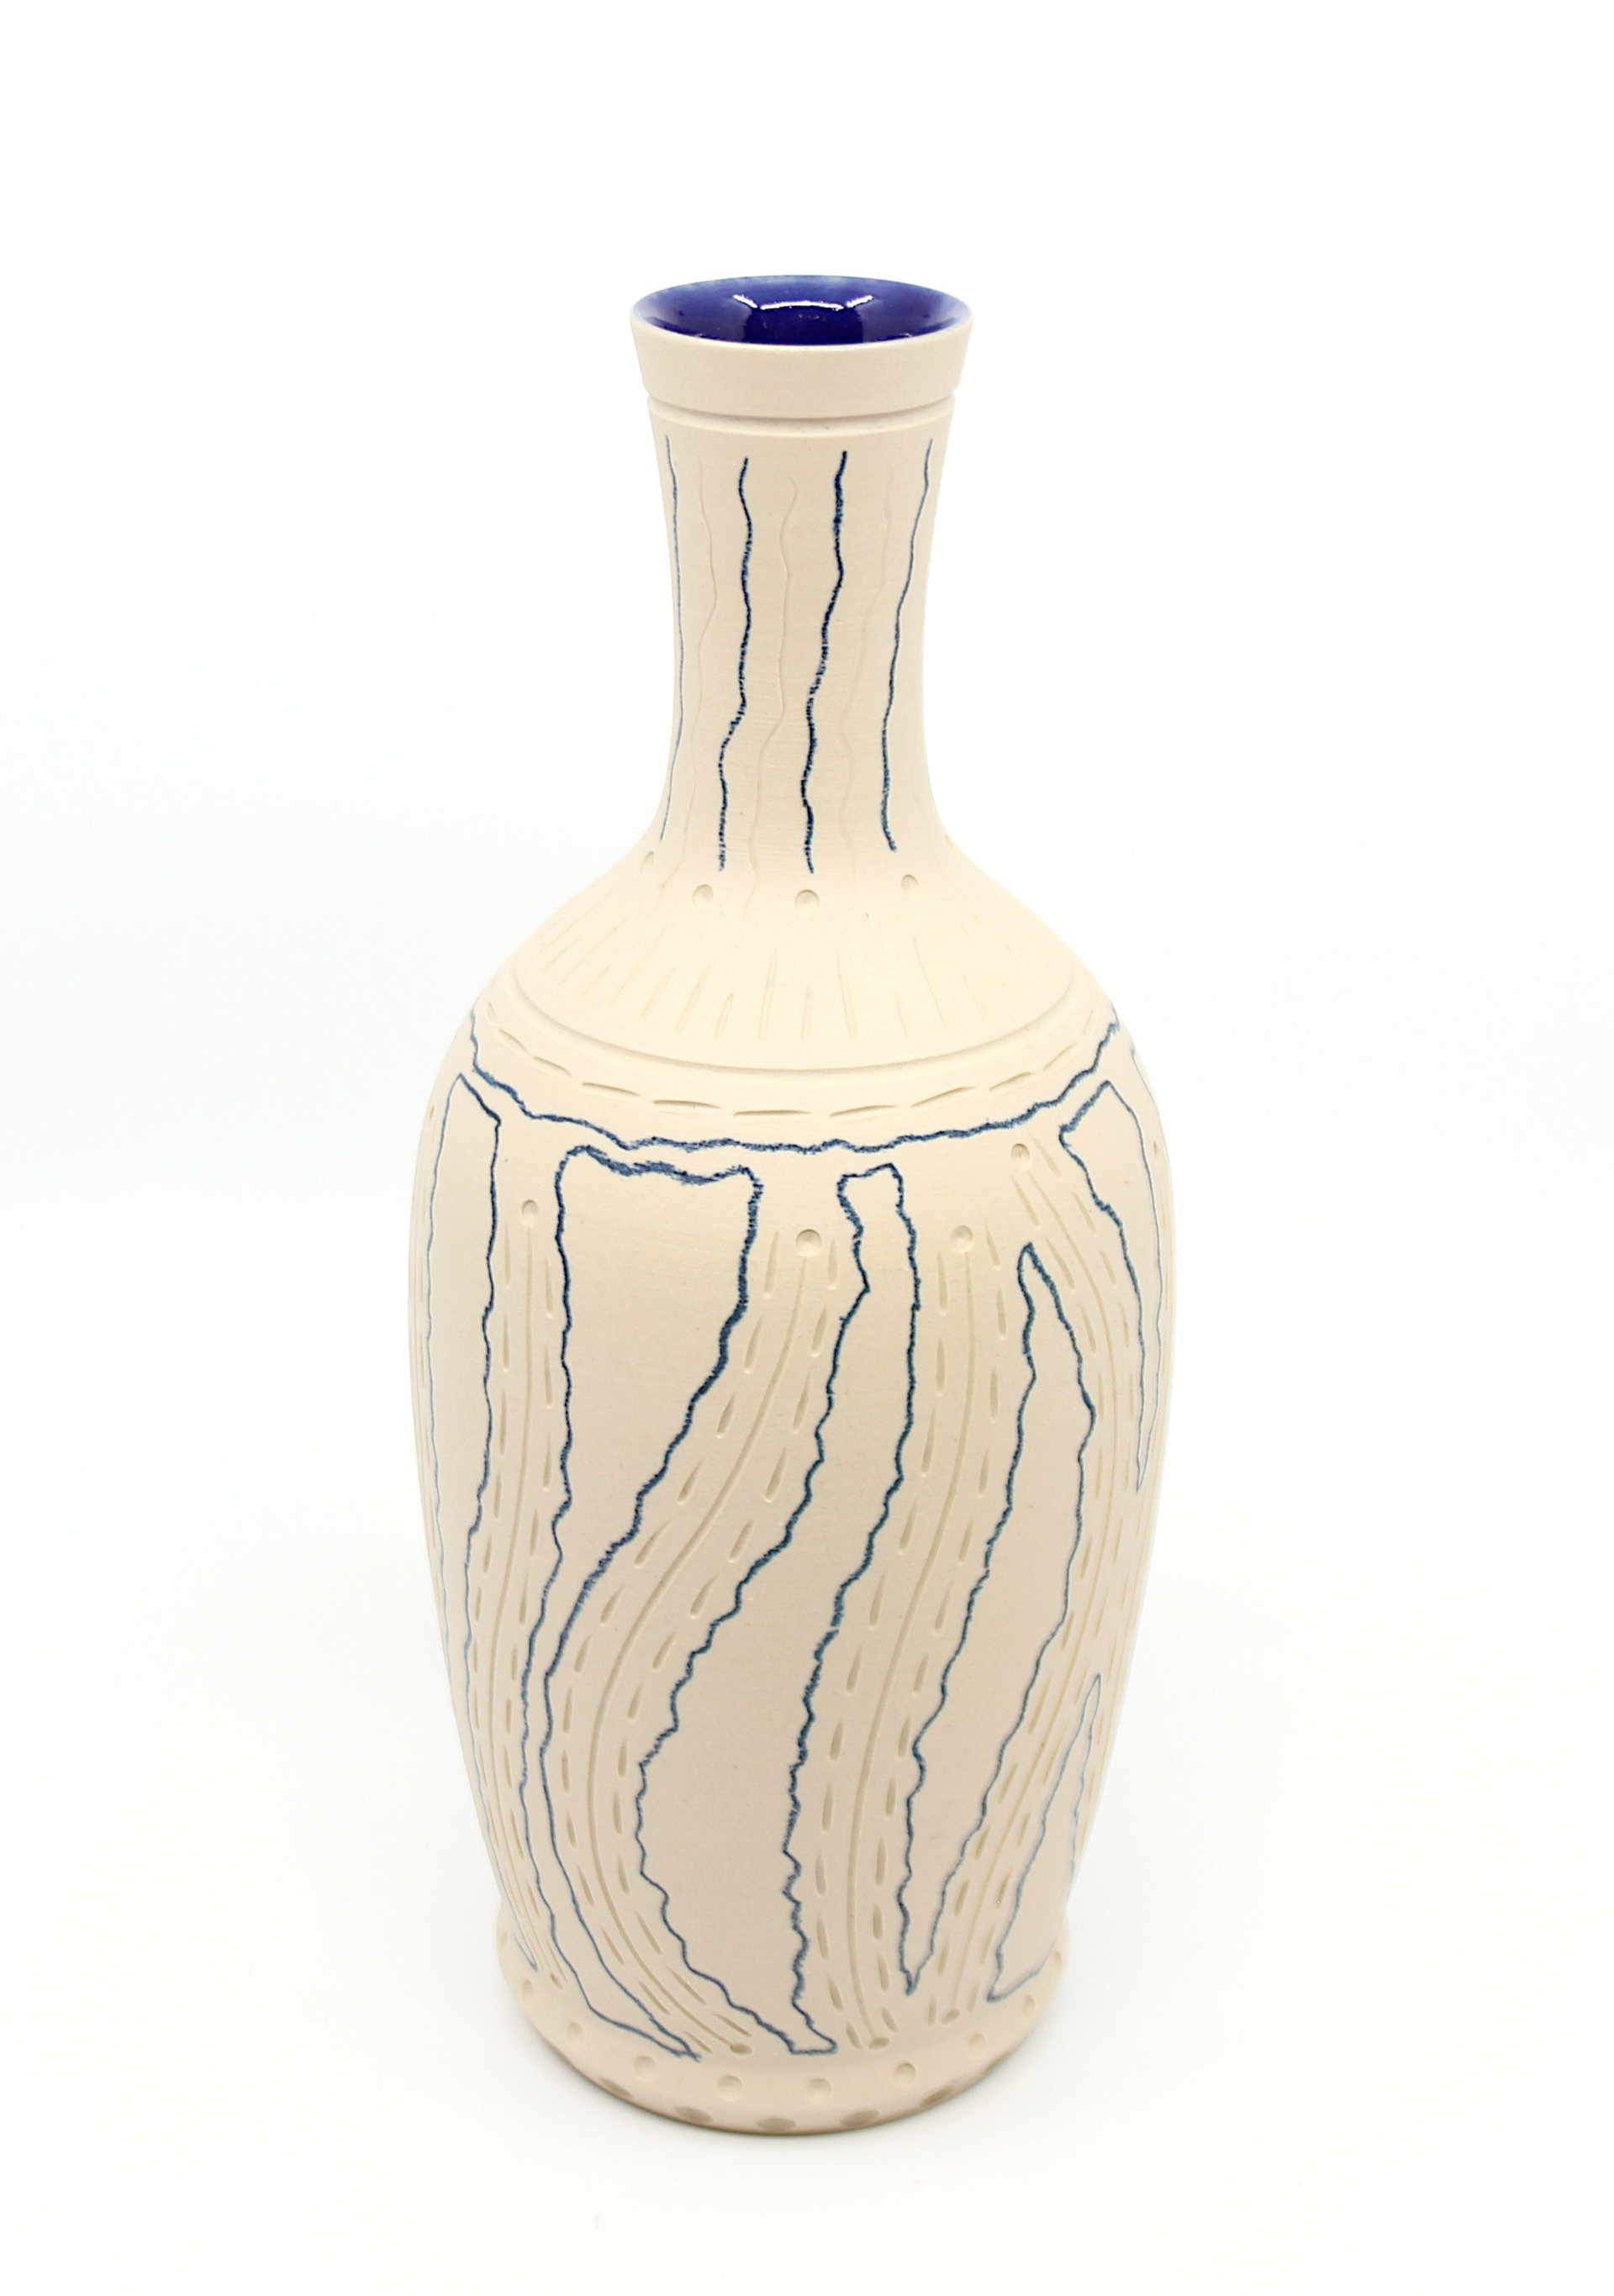 Tall White/Blue Vase by Chris Casey